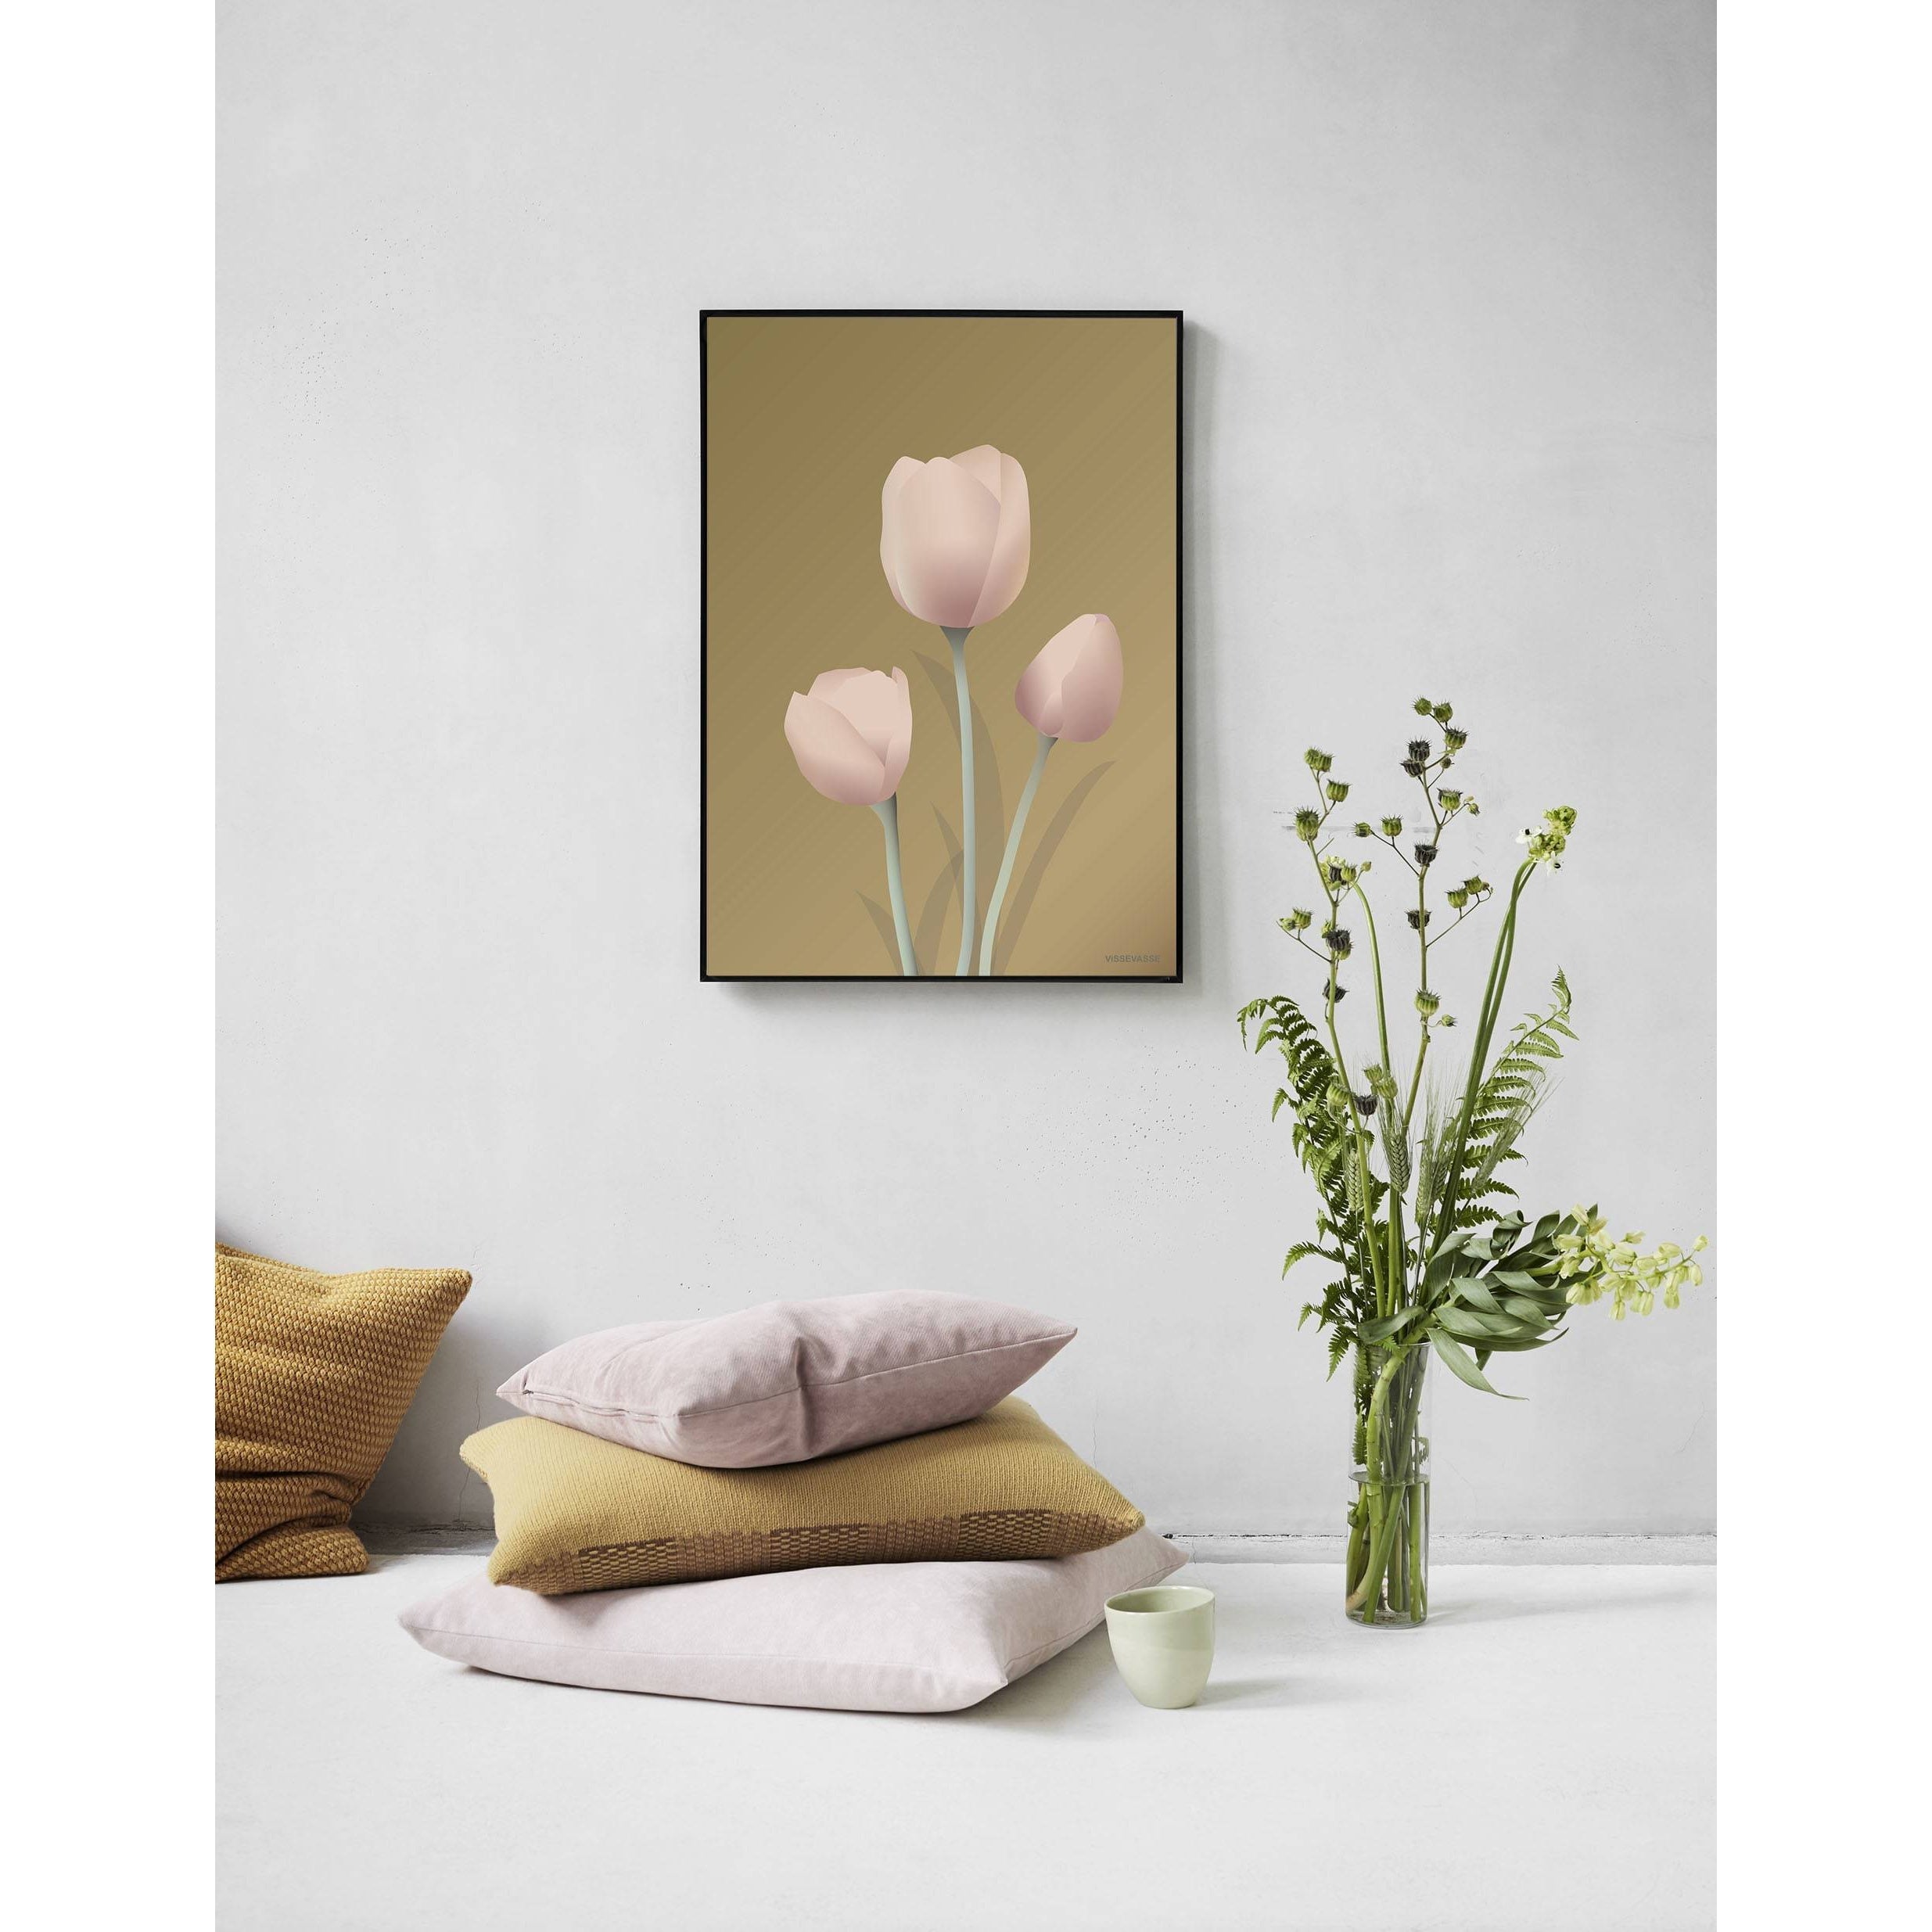 Vissevasse Tulpenposter 15 x21 cm, barnsteen